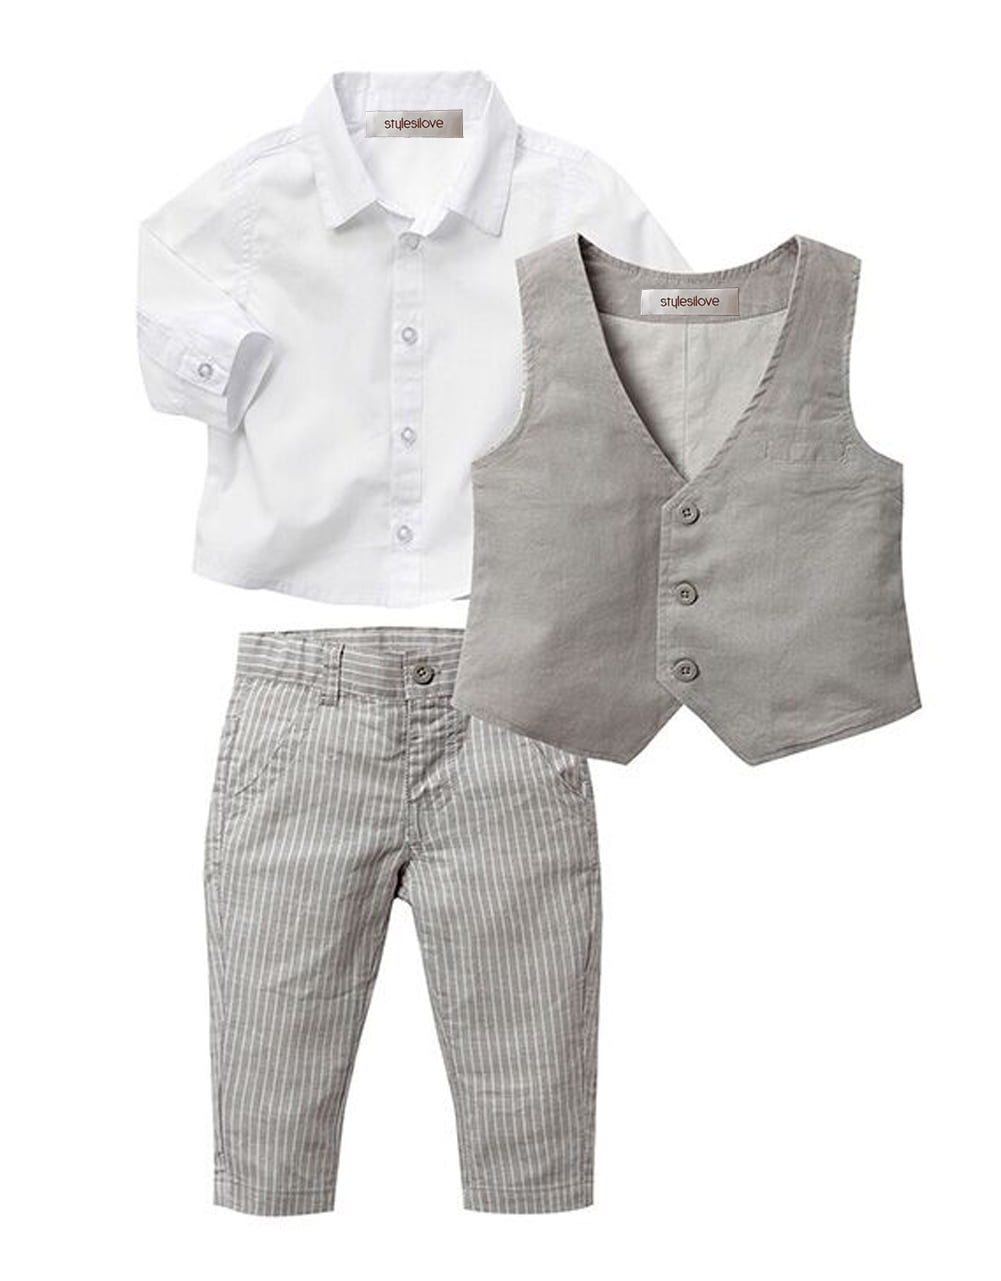 New Boys Elegant Set Baby Pants Vest T Shirt Casual Clothes 2pc Outfit 